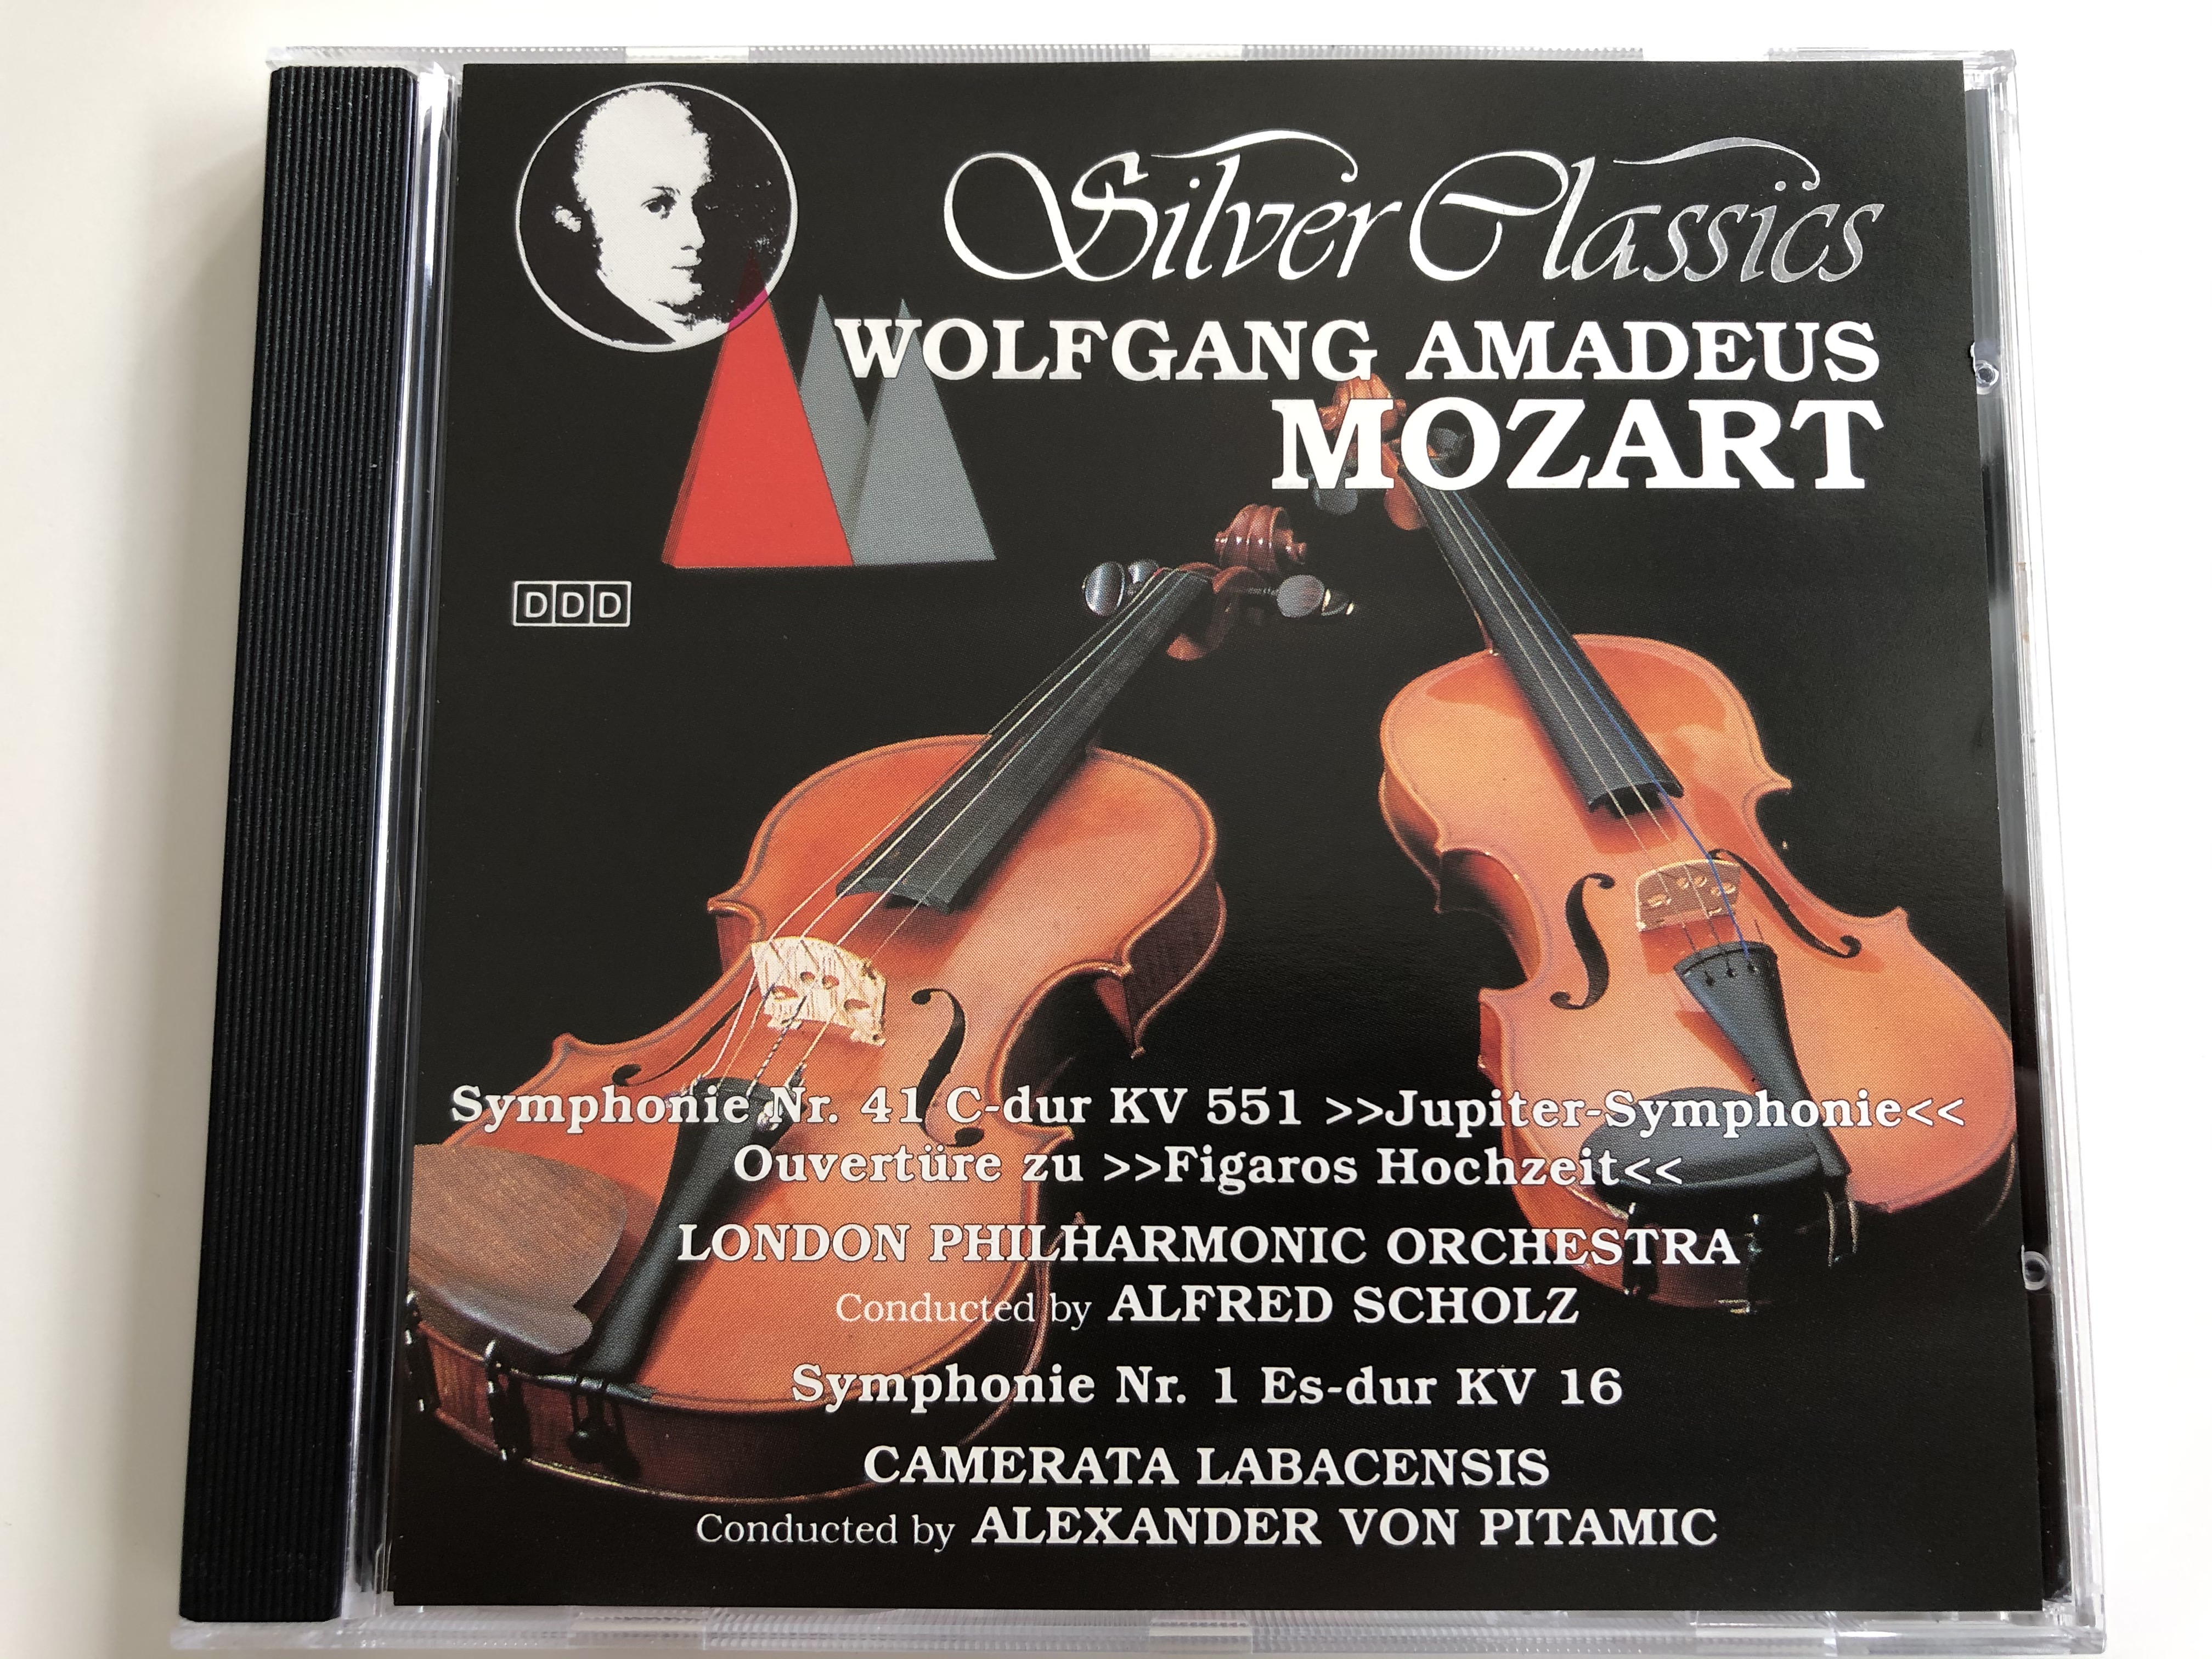 silver-classics-wolfgang-amadeus-mozart-symphonie-nr.-41-c-dur-kv-551-jupiter-symphonie-ouverture-zu-figaros-hochzeit-london-philharmonic-orchestra-symphonie-nr.-1-es-dur-kv-16-camerata-lab-1-.jpg